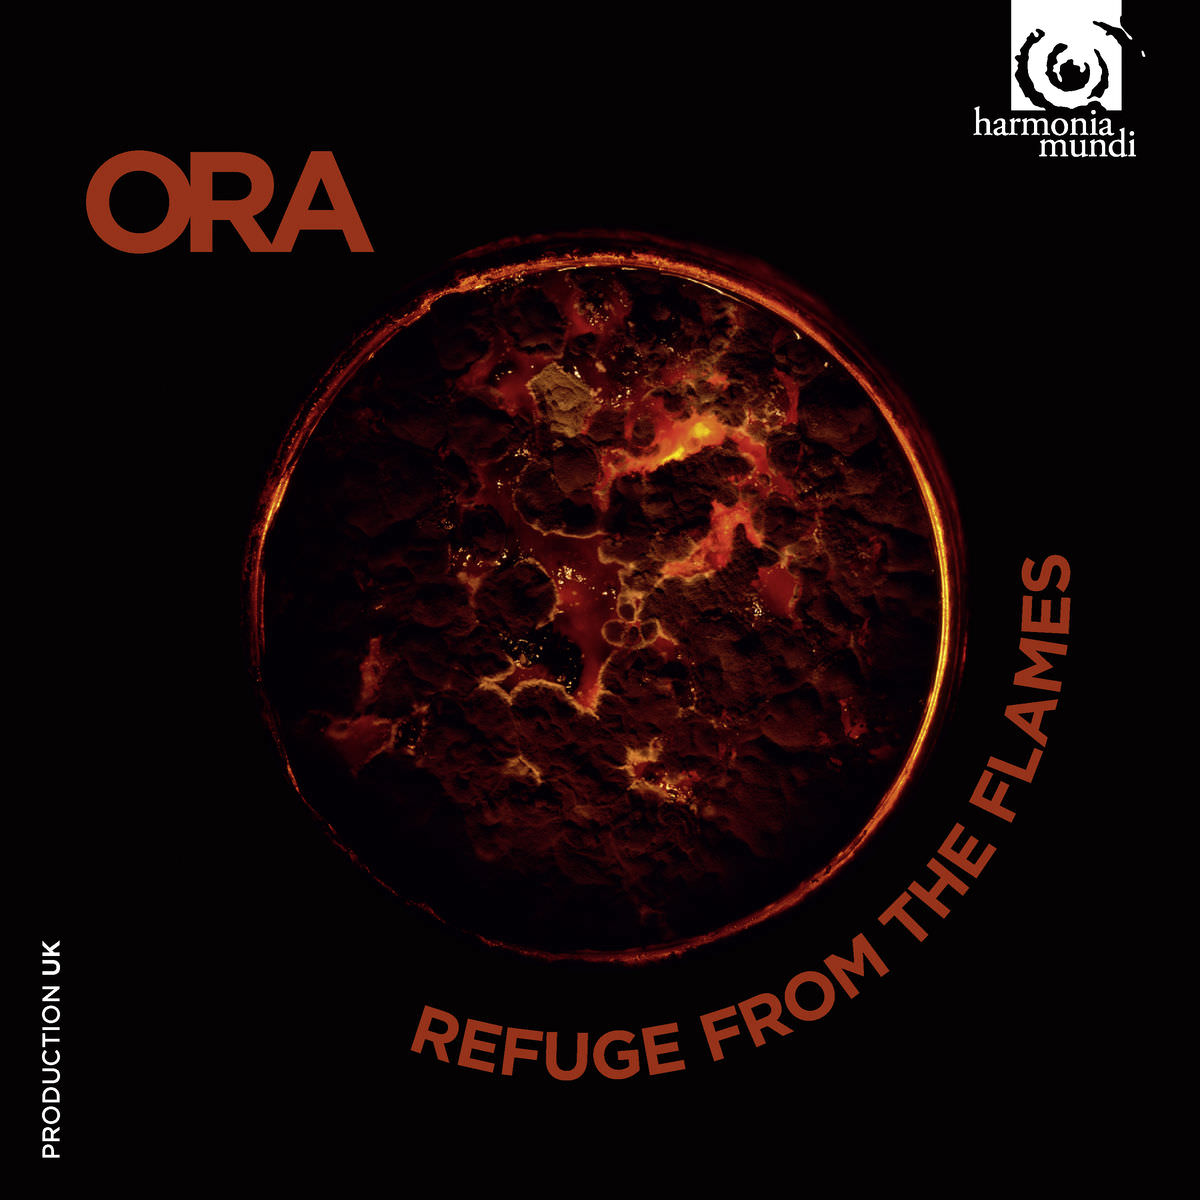 Ora – Refuge from the Flames, Miserere and the Savonarola Legacy (2016) [Qobuz FLAC 24bit/96kHz]